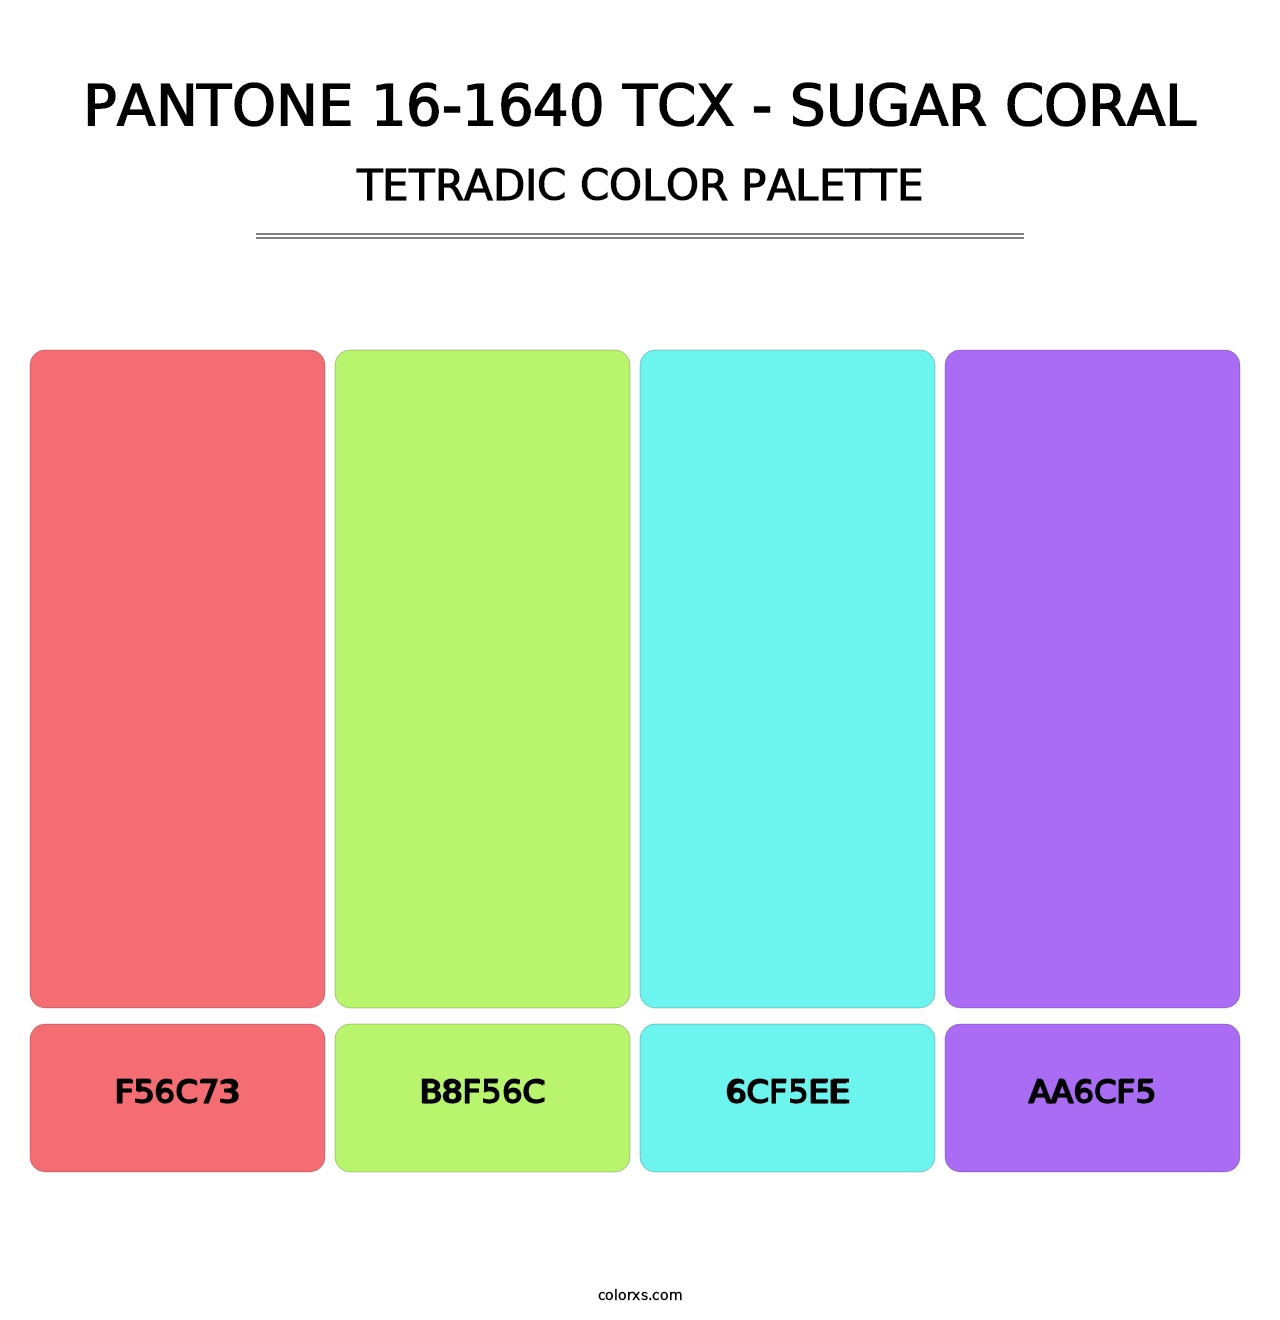 PANTONE 16-1640 TCX - Sugar Coral - Tetradic Color Palette